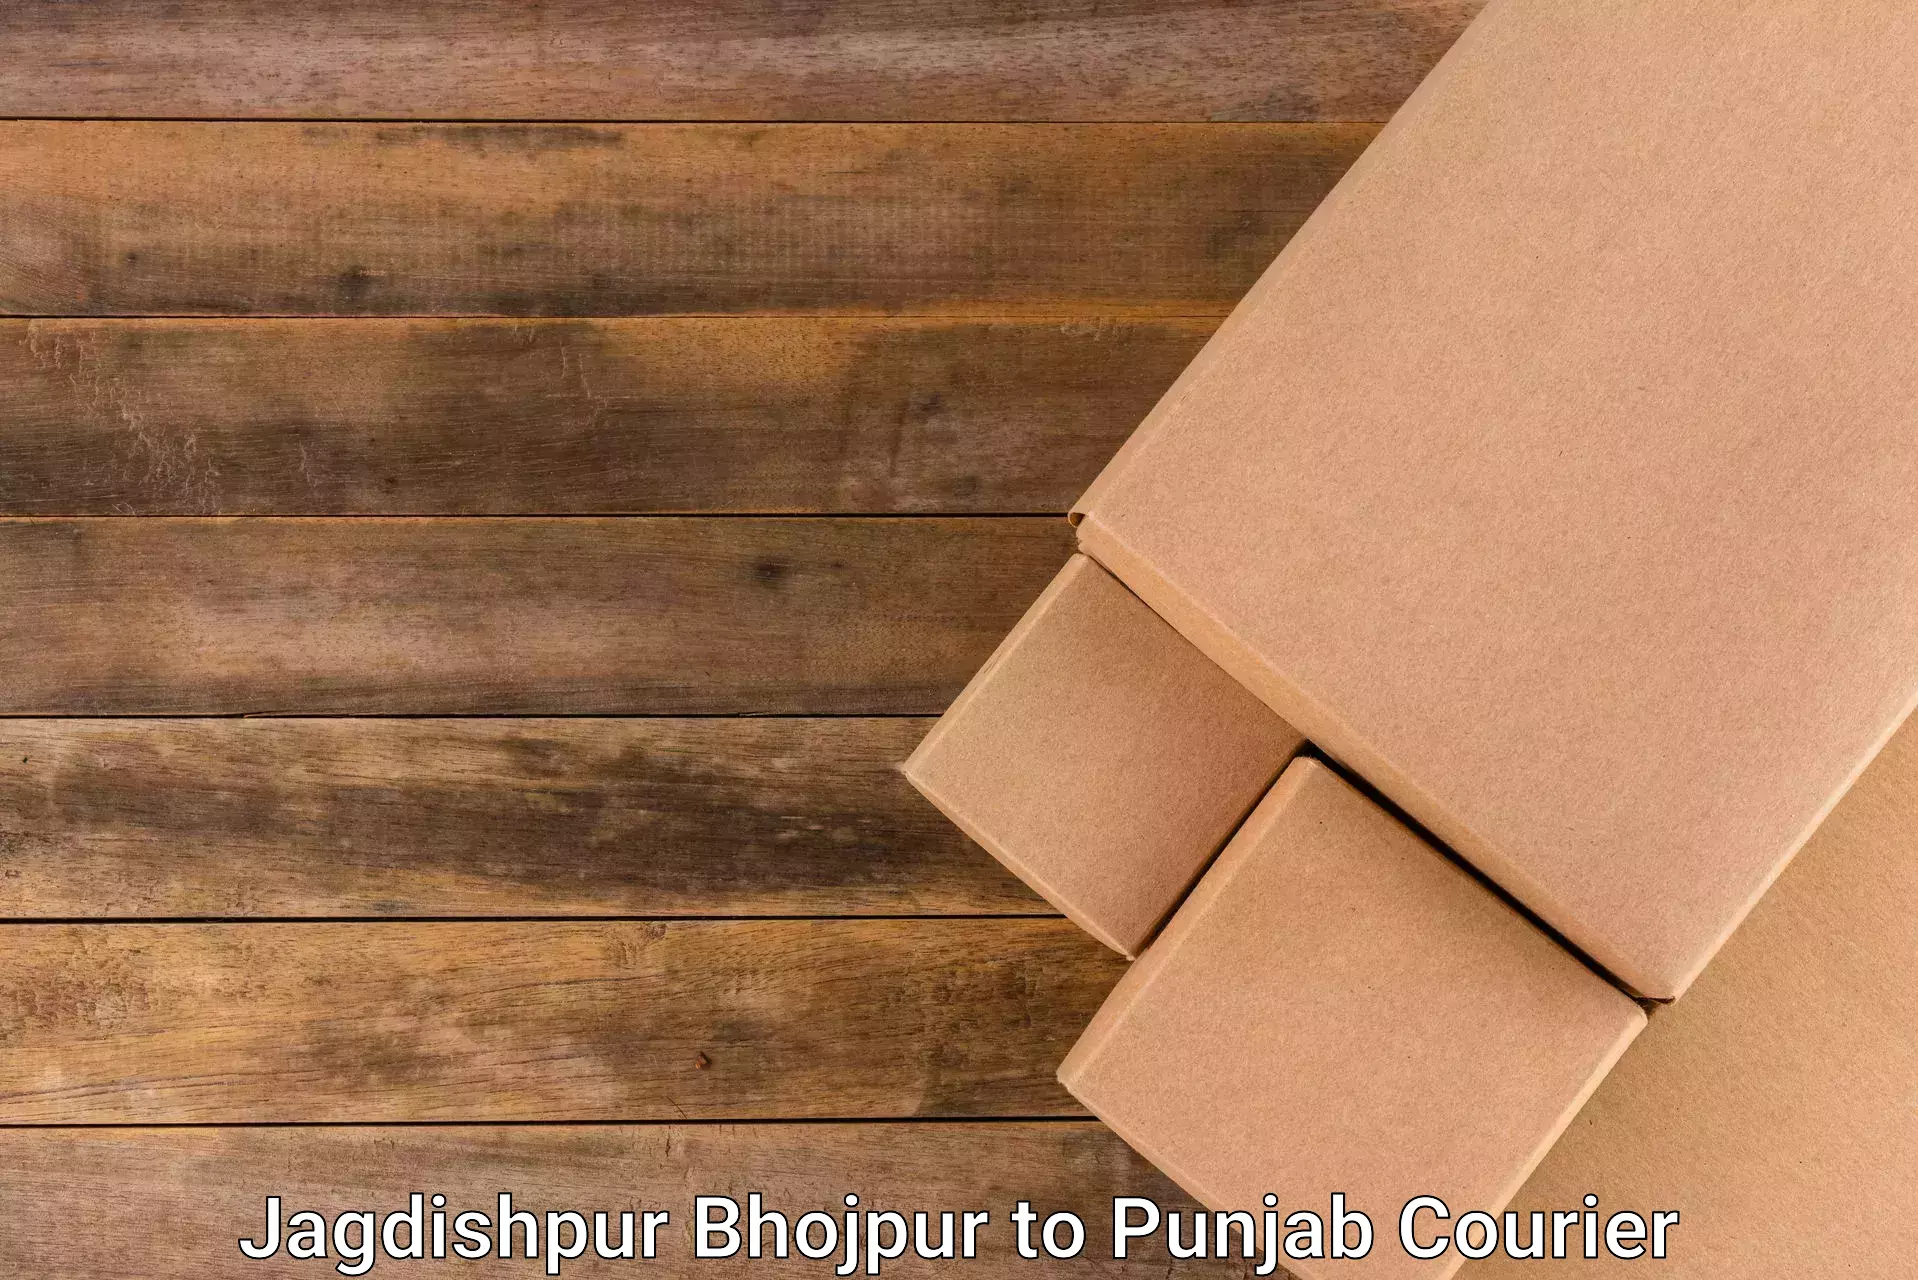 Package delivery network Jagdishpur Bhojpur to Goindwal Sahib